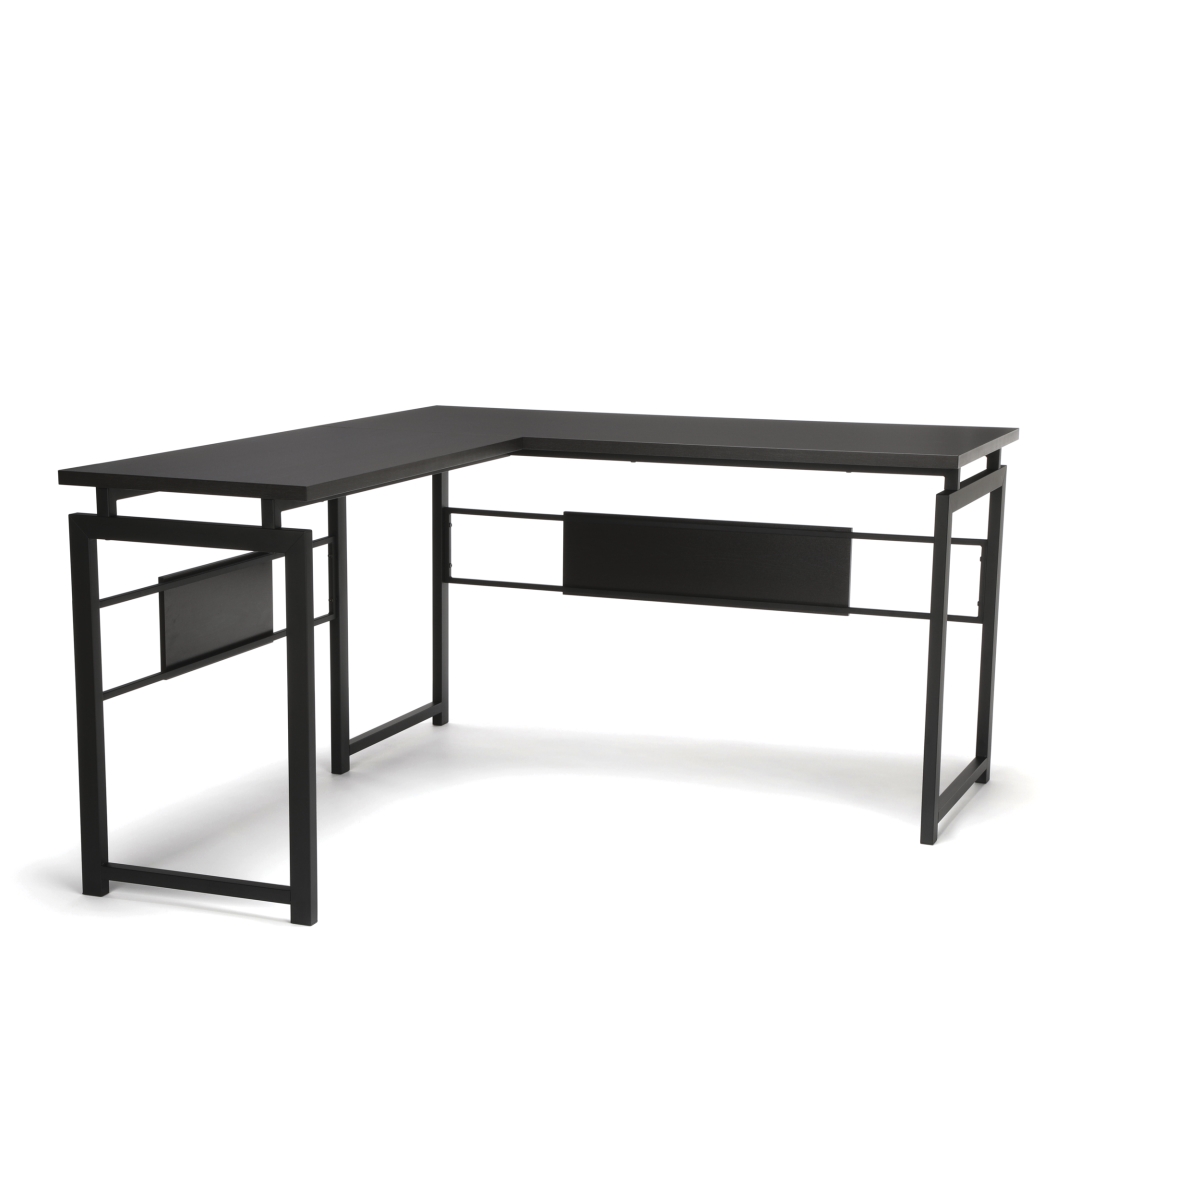 Ess-1020-blk-esp L Desk With Metal Legs, Espresso With Black Frame